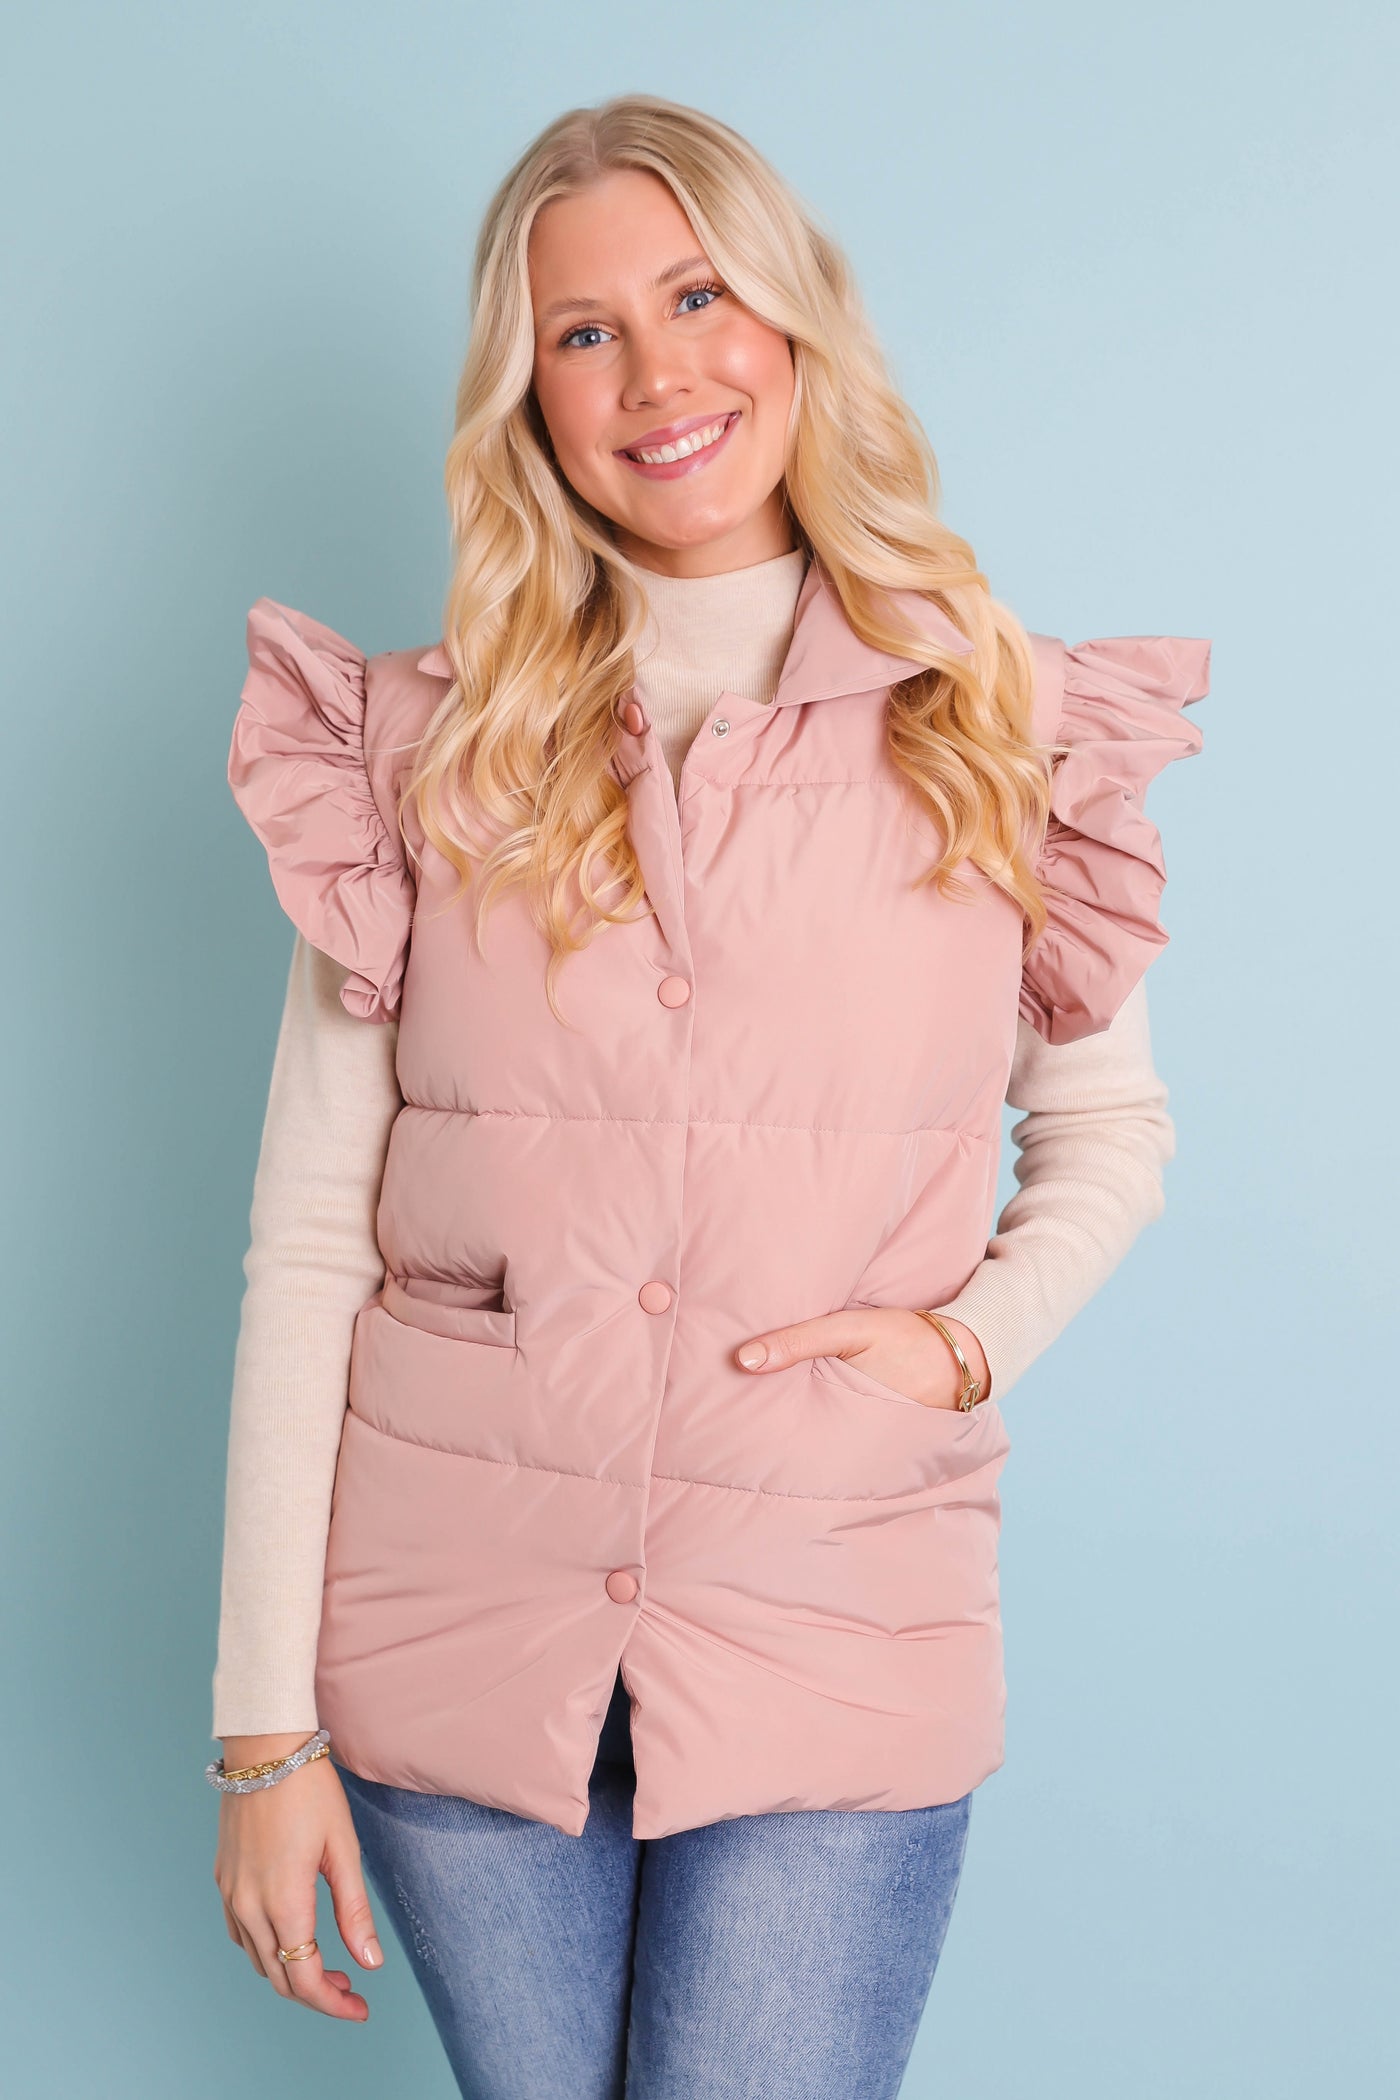 Women's Preppy Puffer Vest- Puffer Vest With Ruffles- Blush Pink Puffer Vest